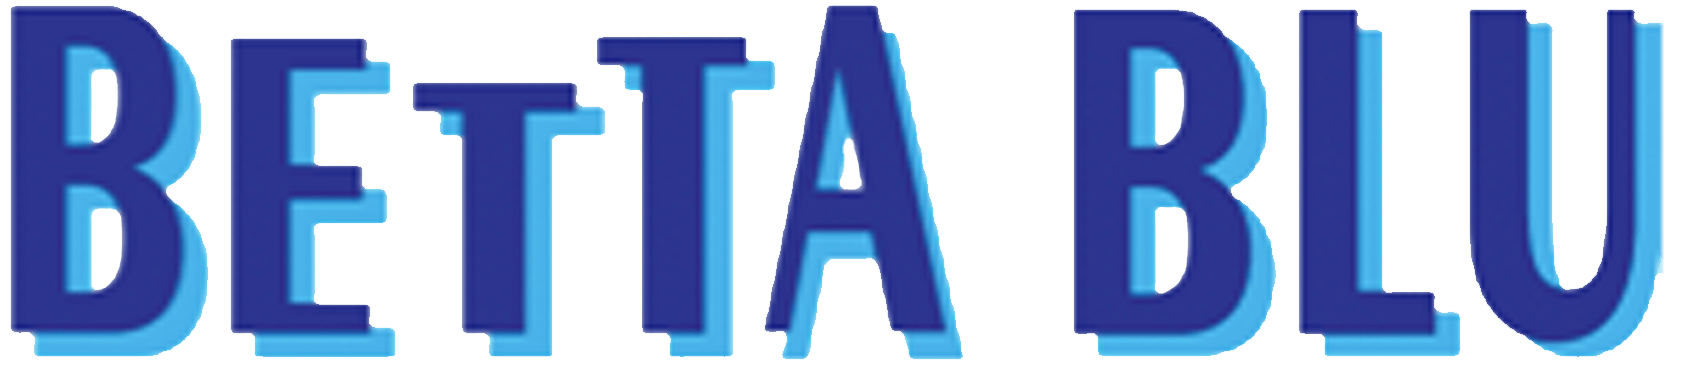 Betta Blu Logo